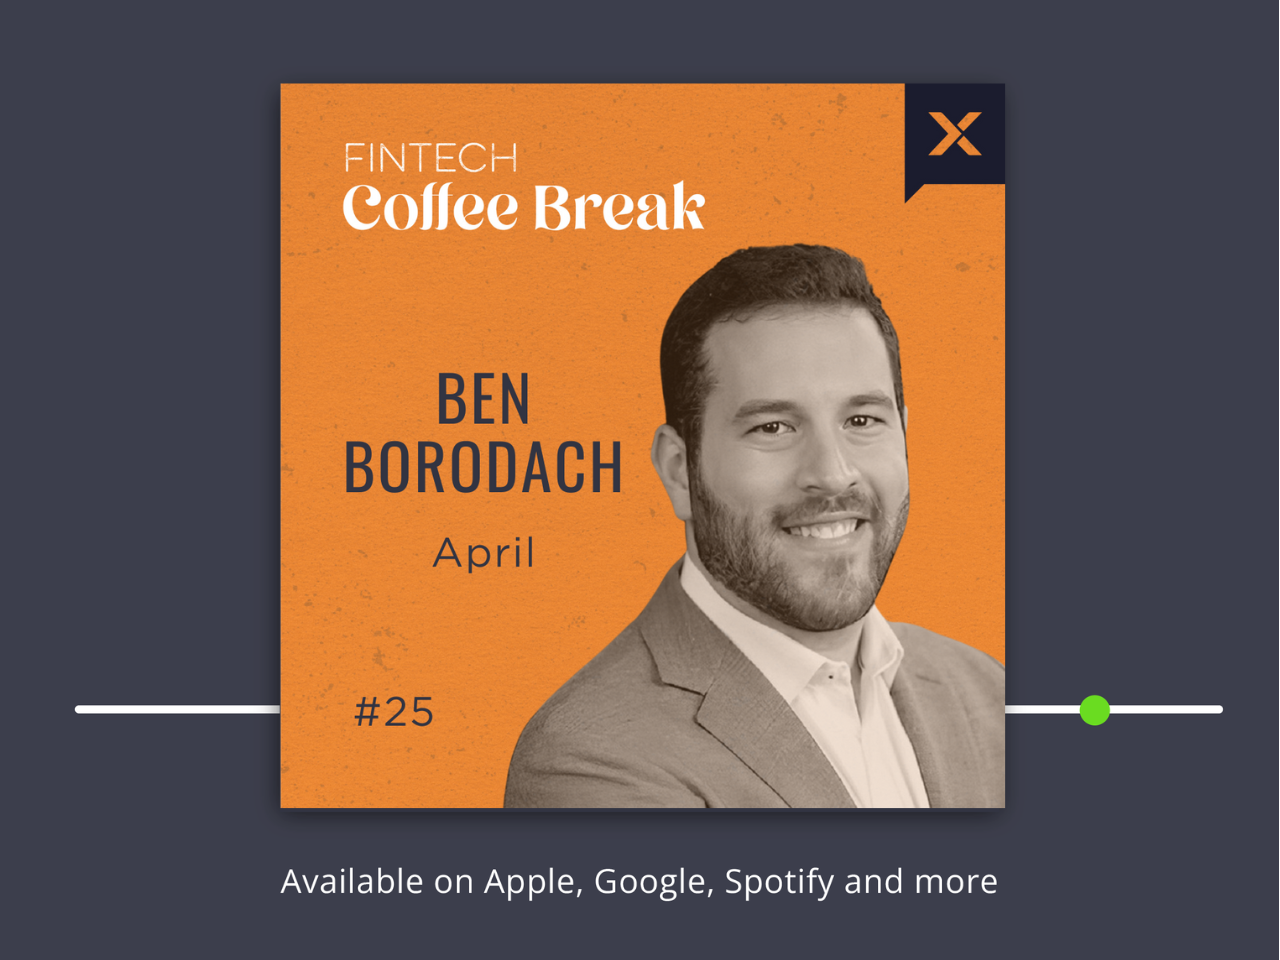 The Fintech Coffee Break - Ben Borodach, April